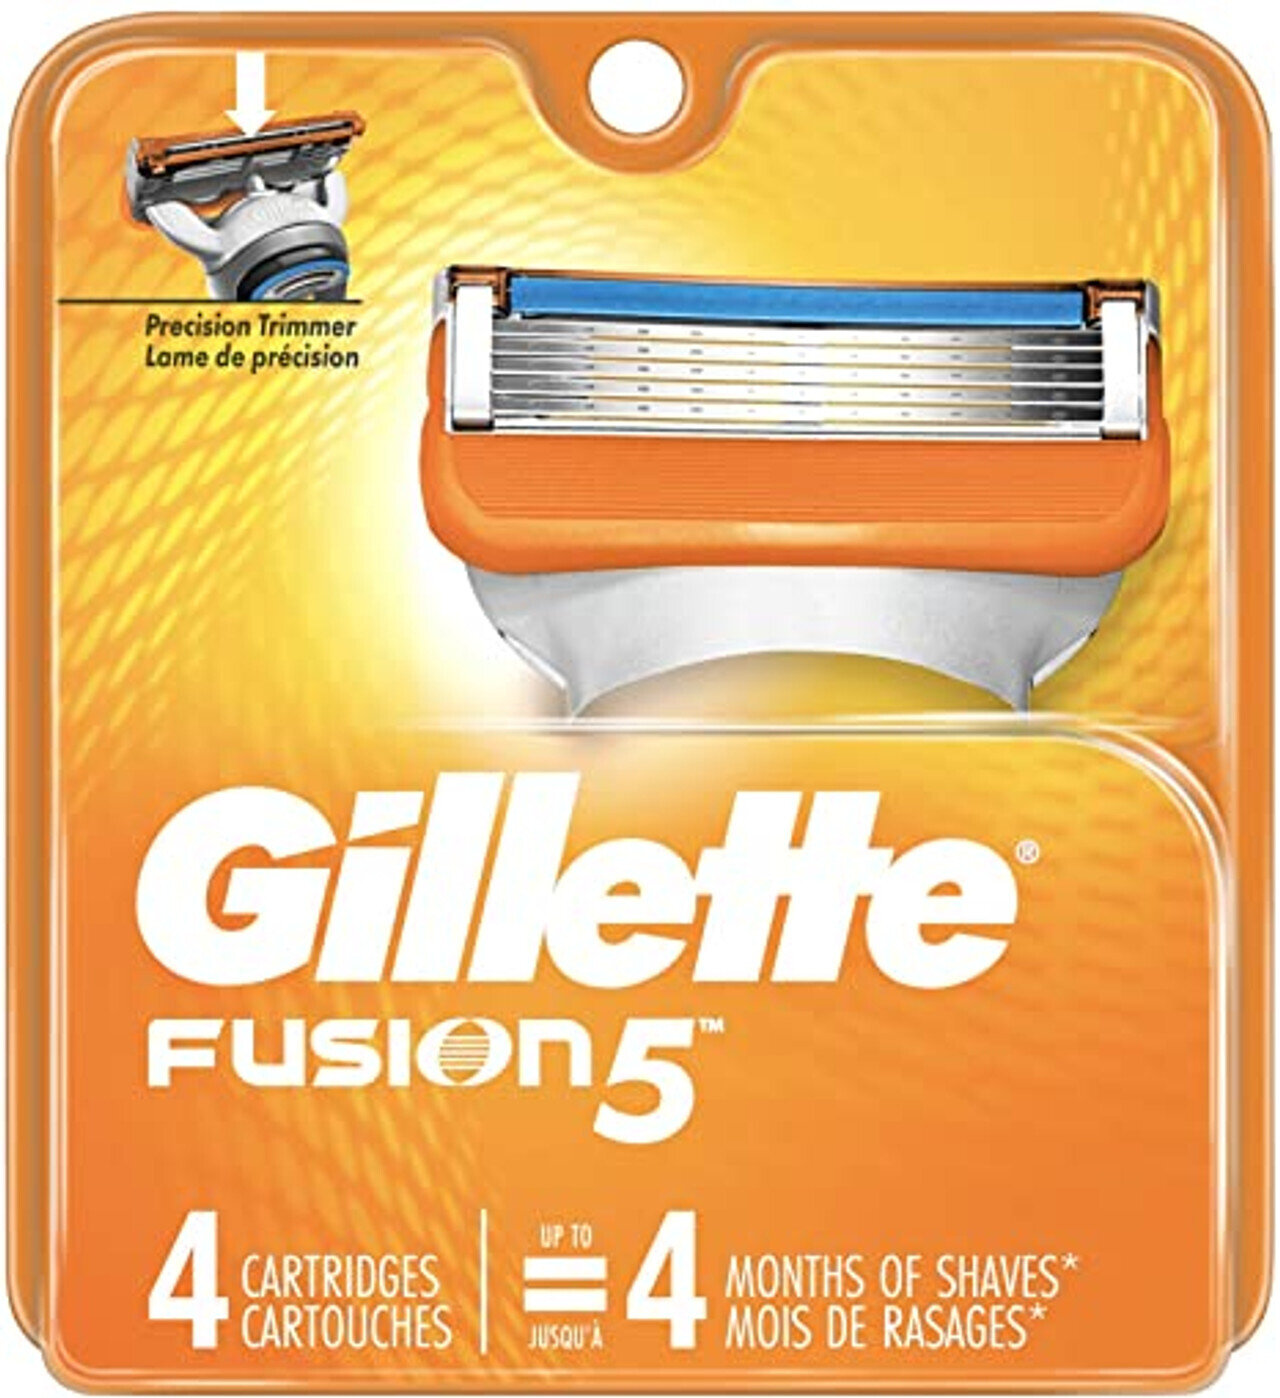 Gillette Fusion 5 Refill, 4 Cartridges